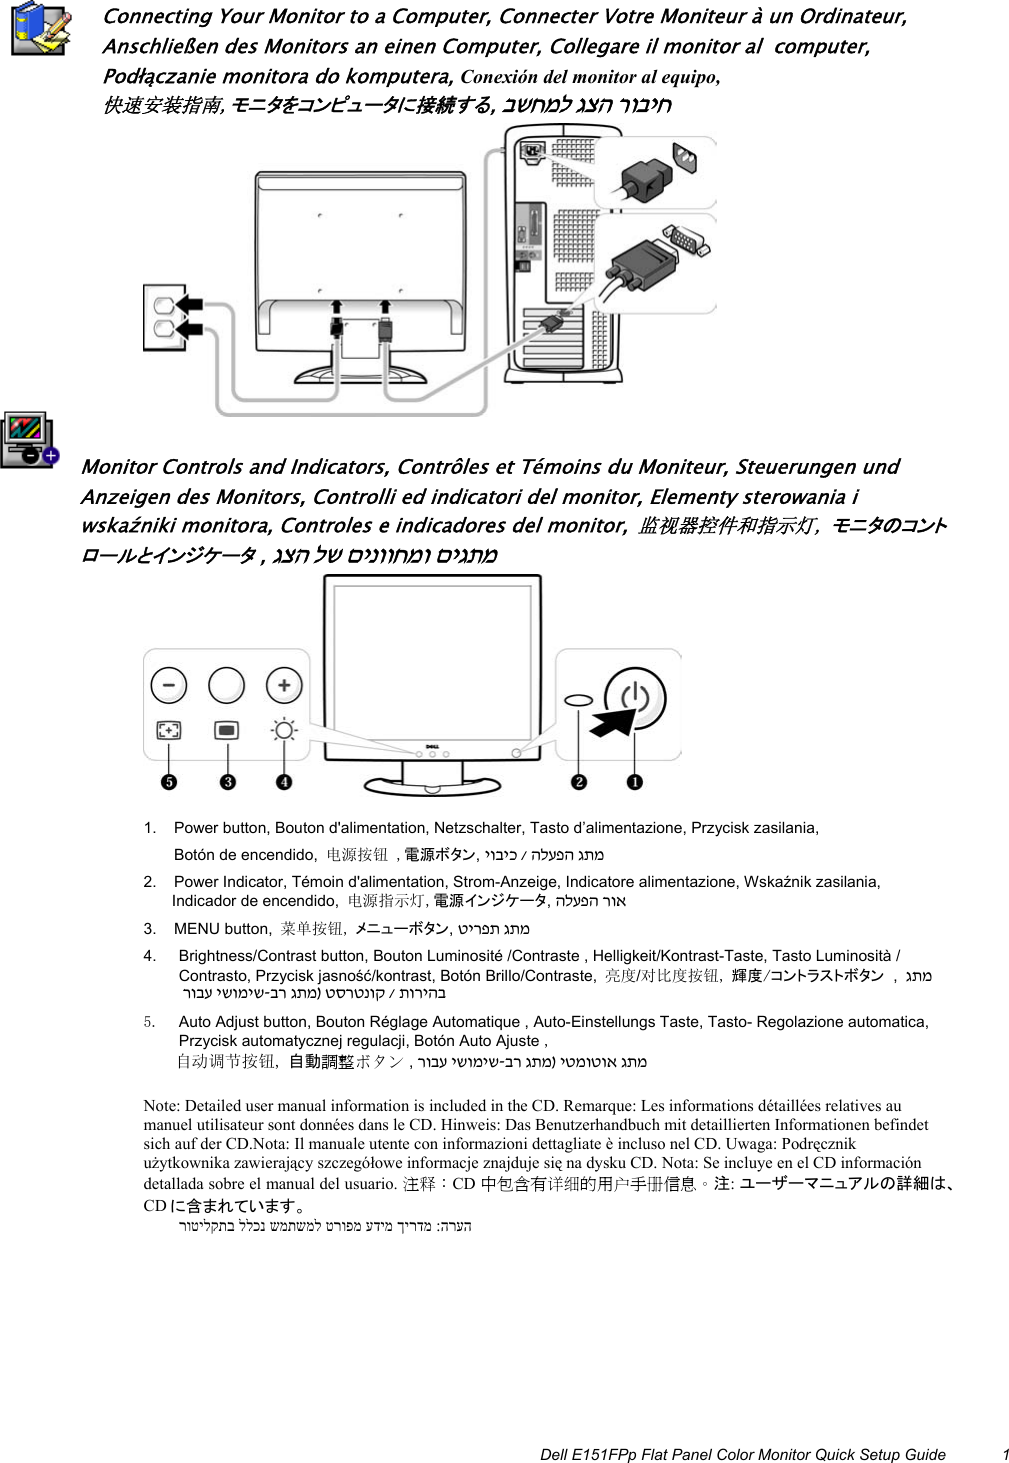 Page 1 of 1 - Dell Dell-E151Fpp-Users-Manual E151FP